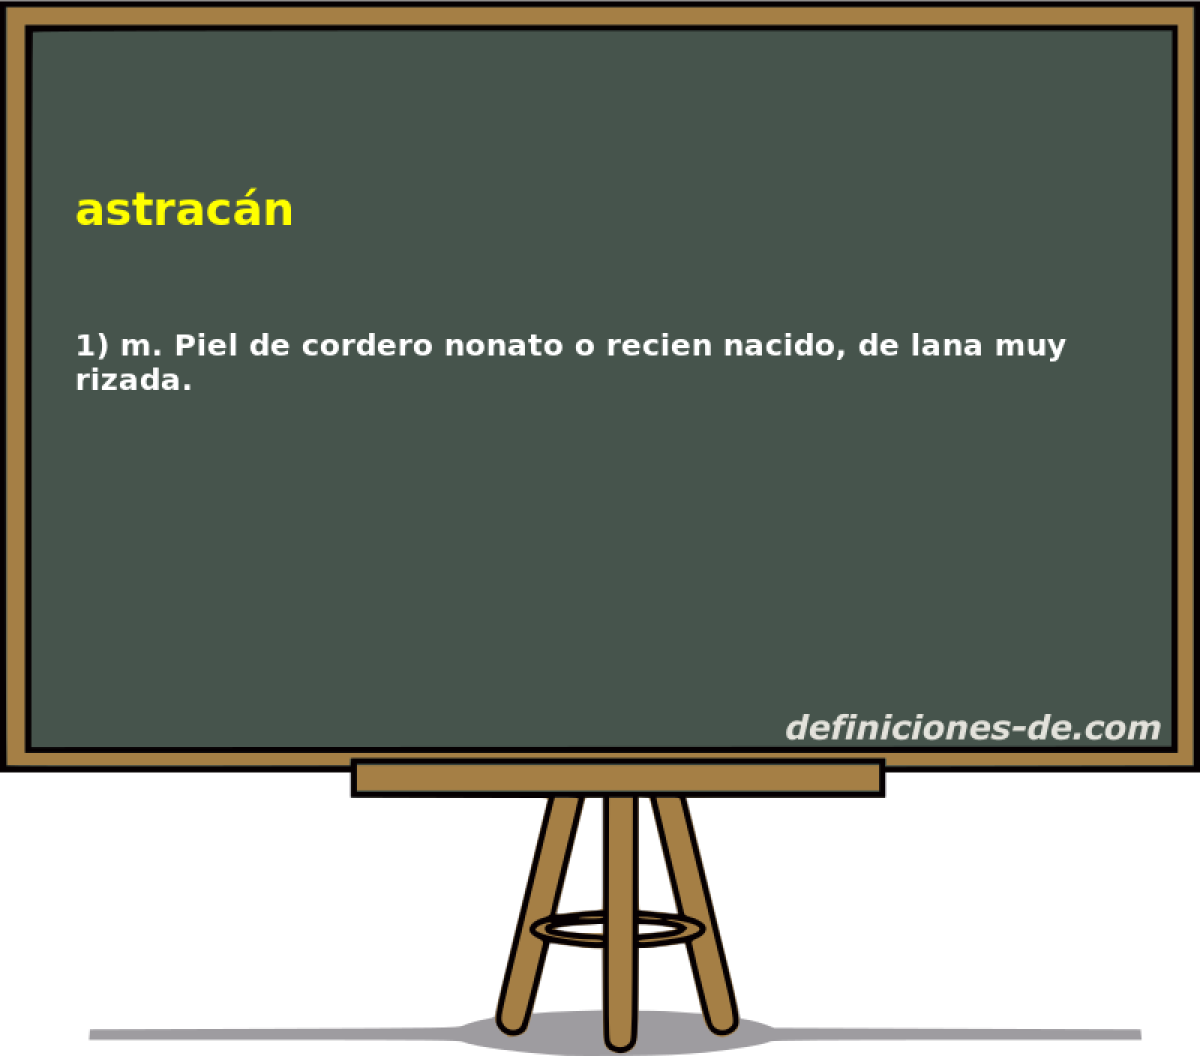 astracn 